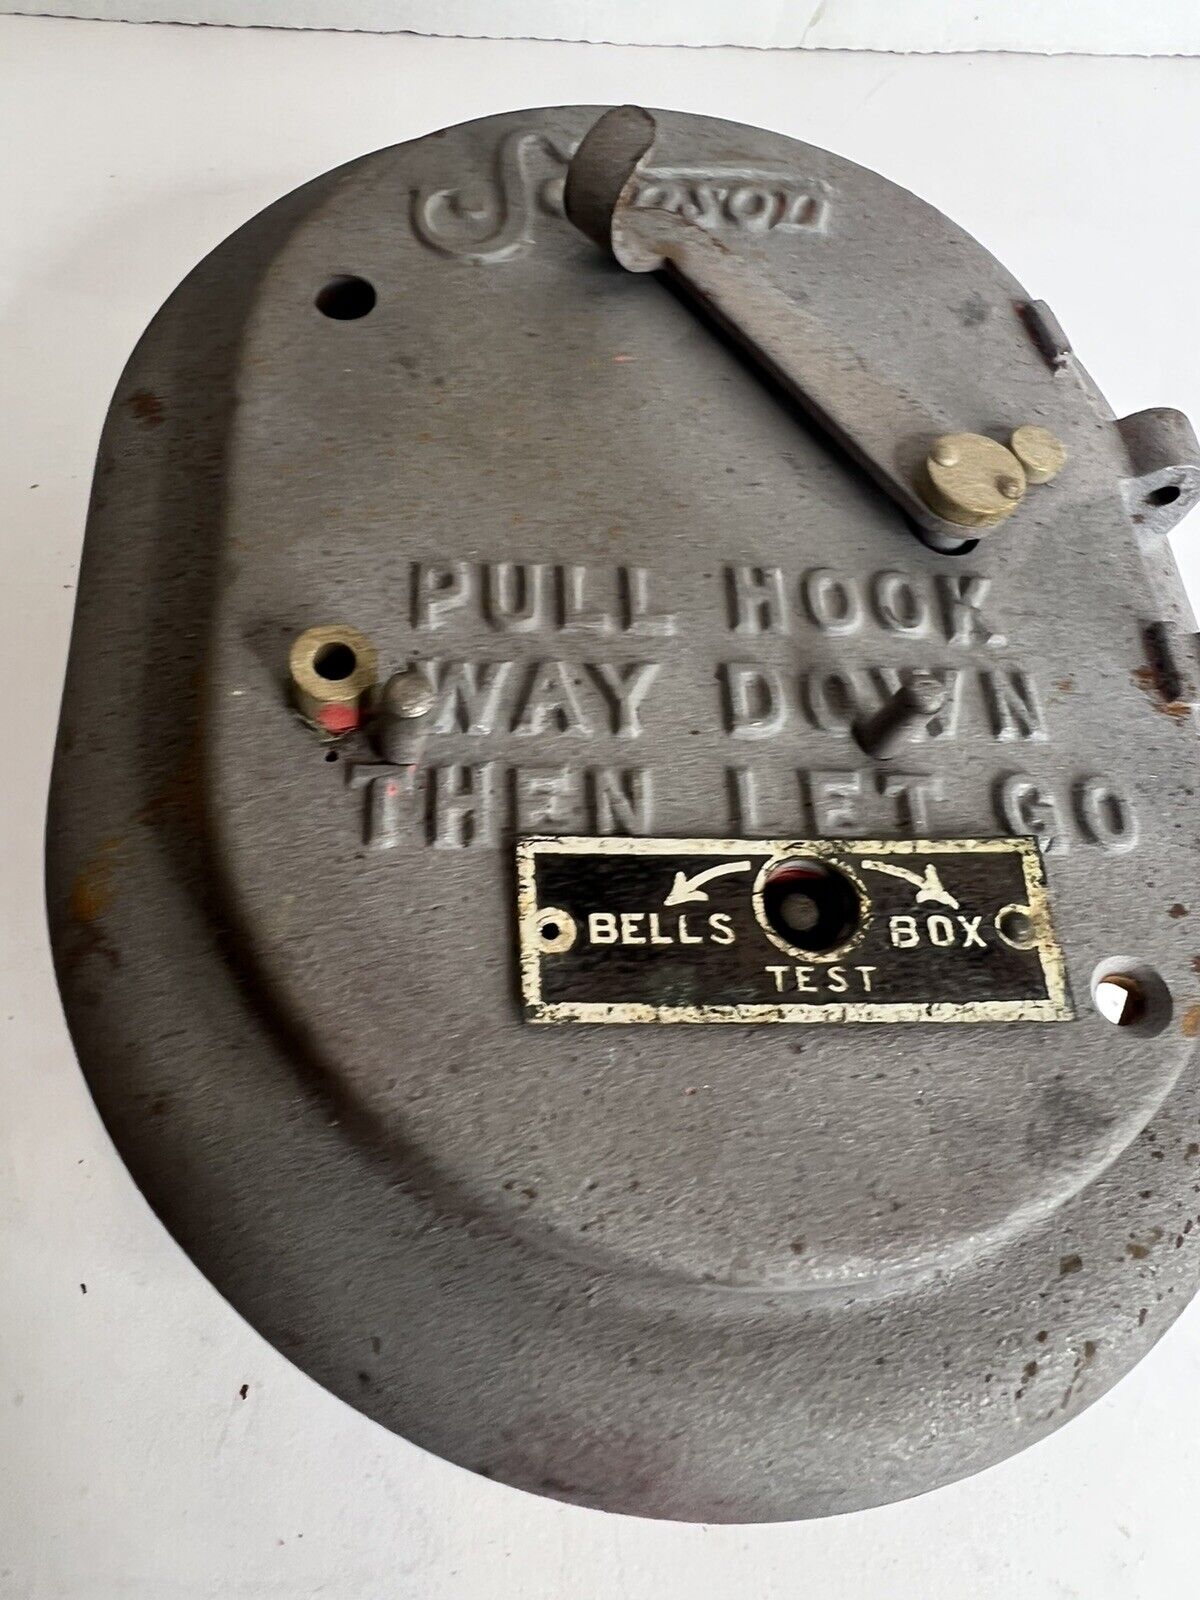 samson fire alarm Vintage Decor pull hook bell box test, W Parts